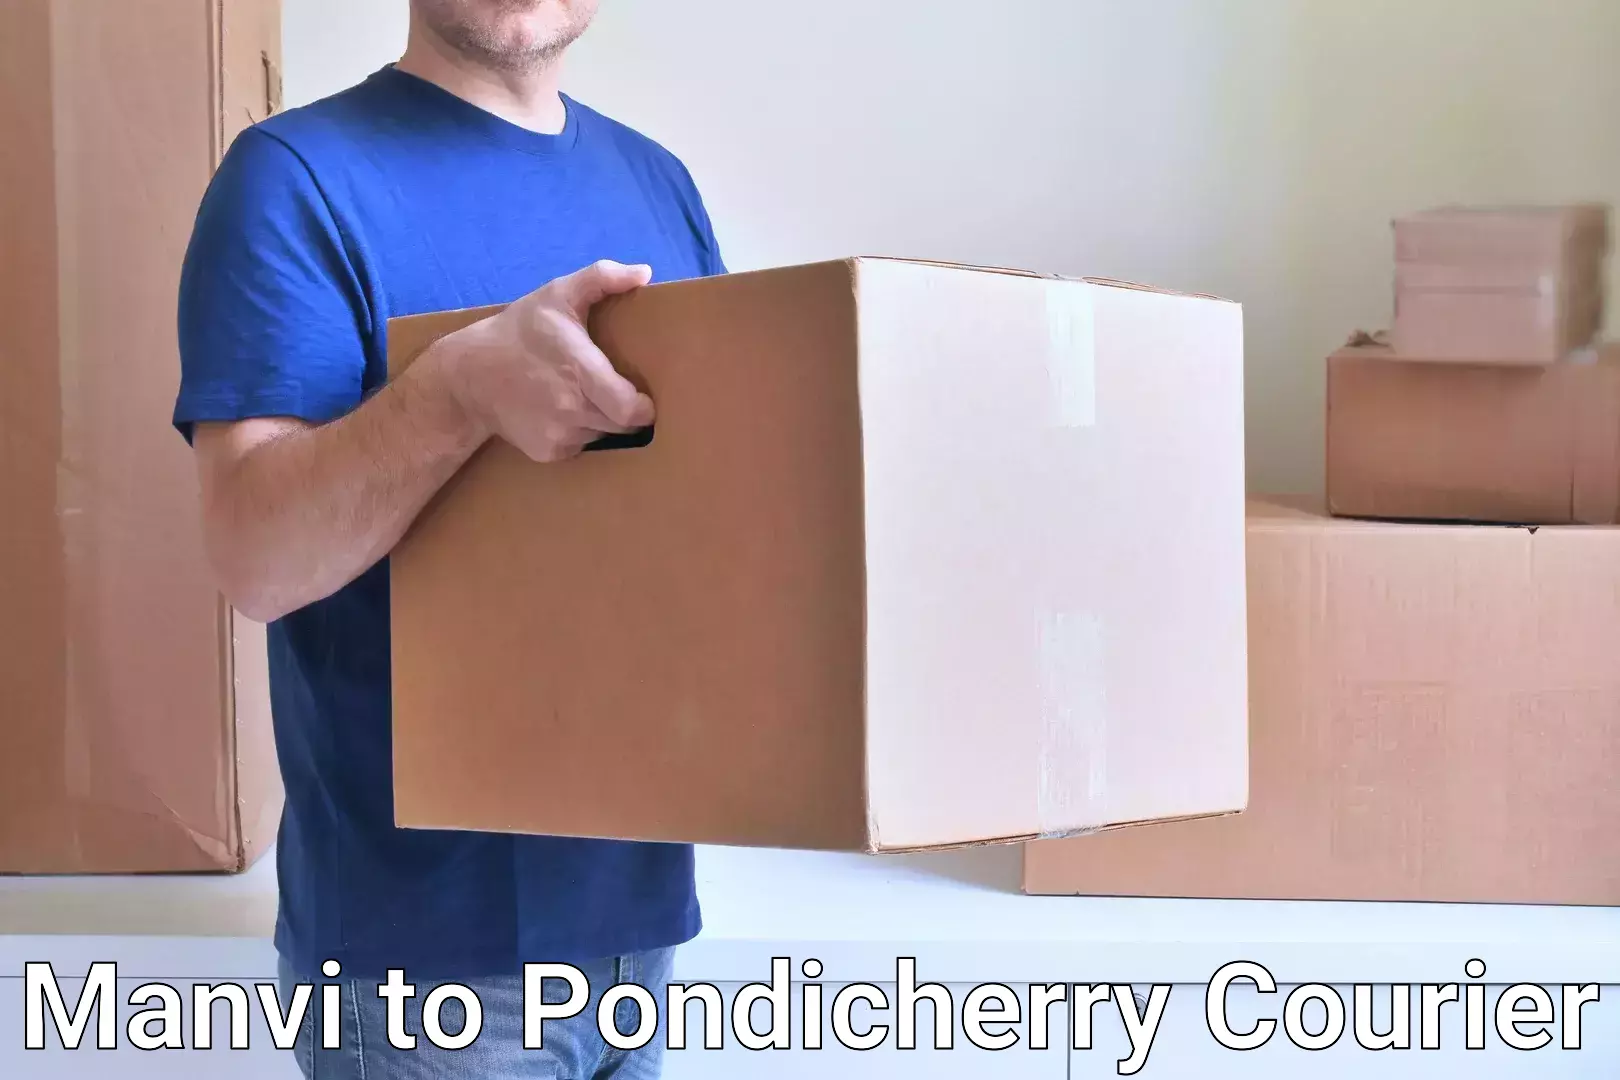 Business delivery service Manvi to Pondicherry